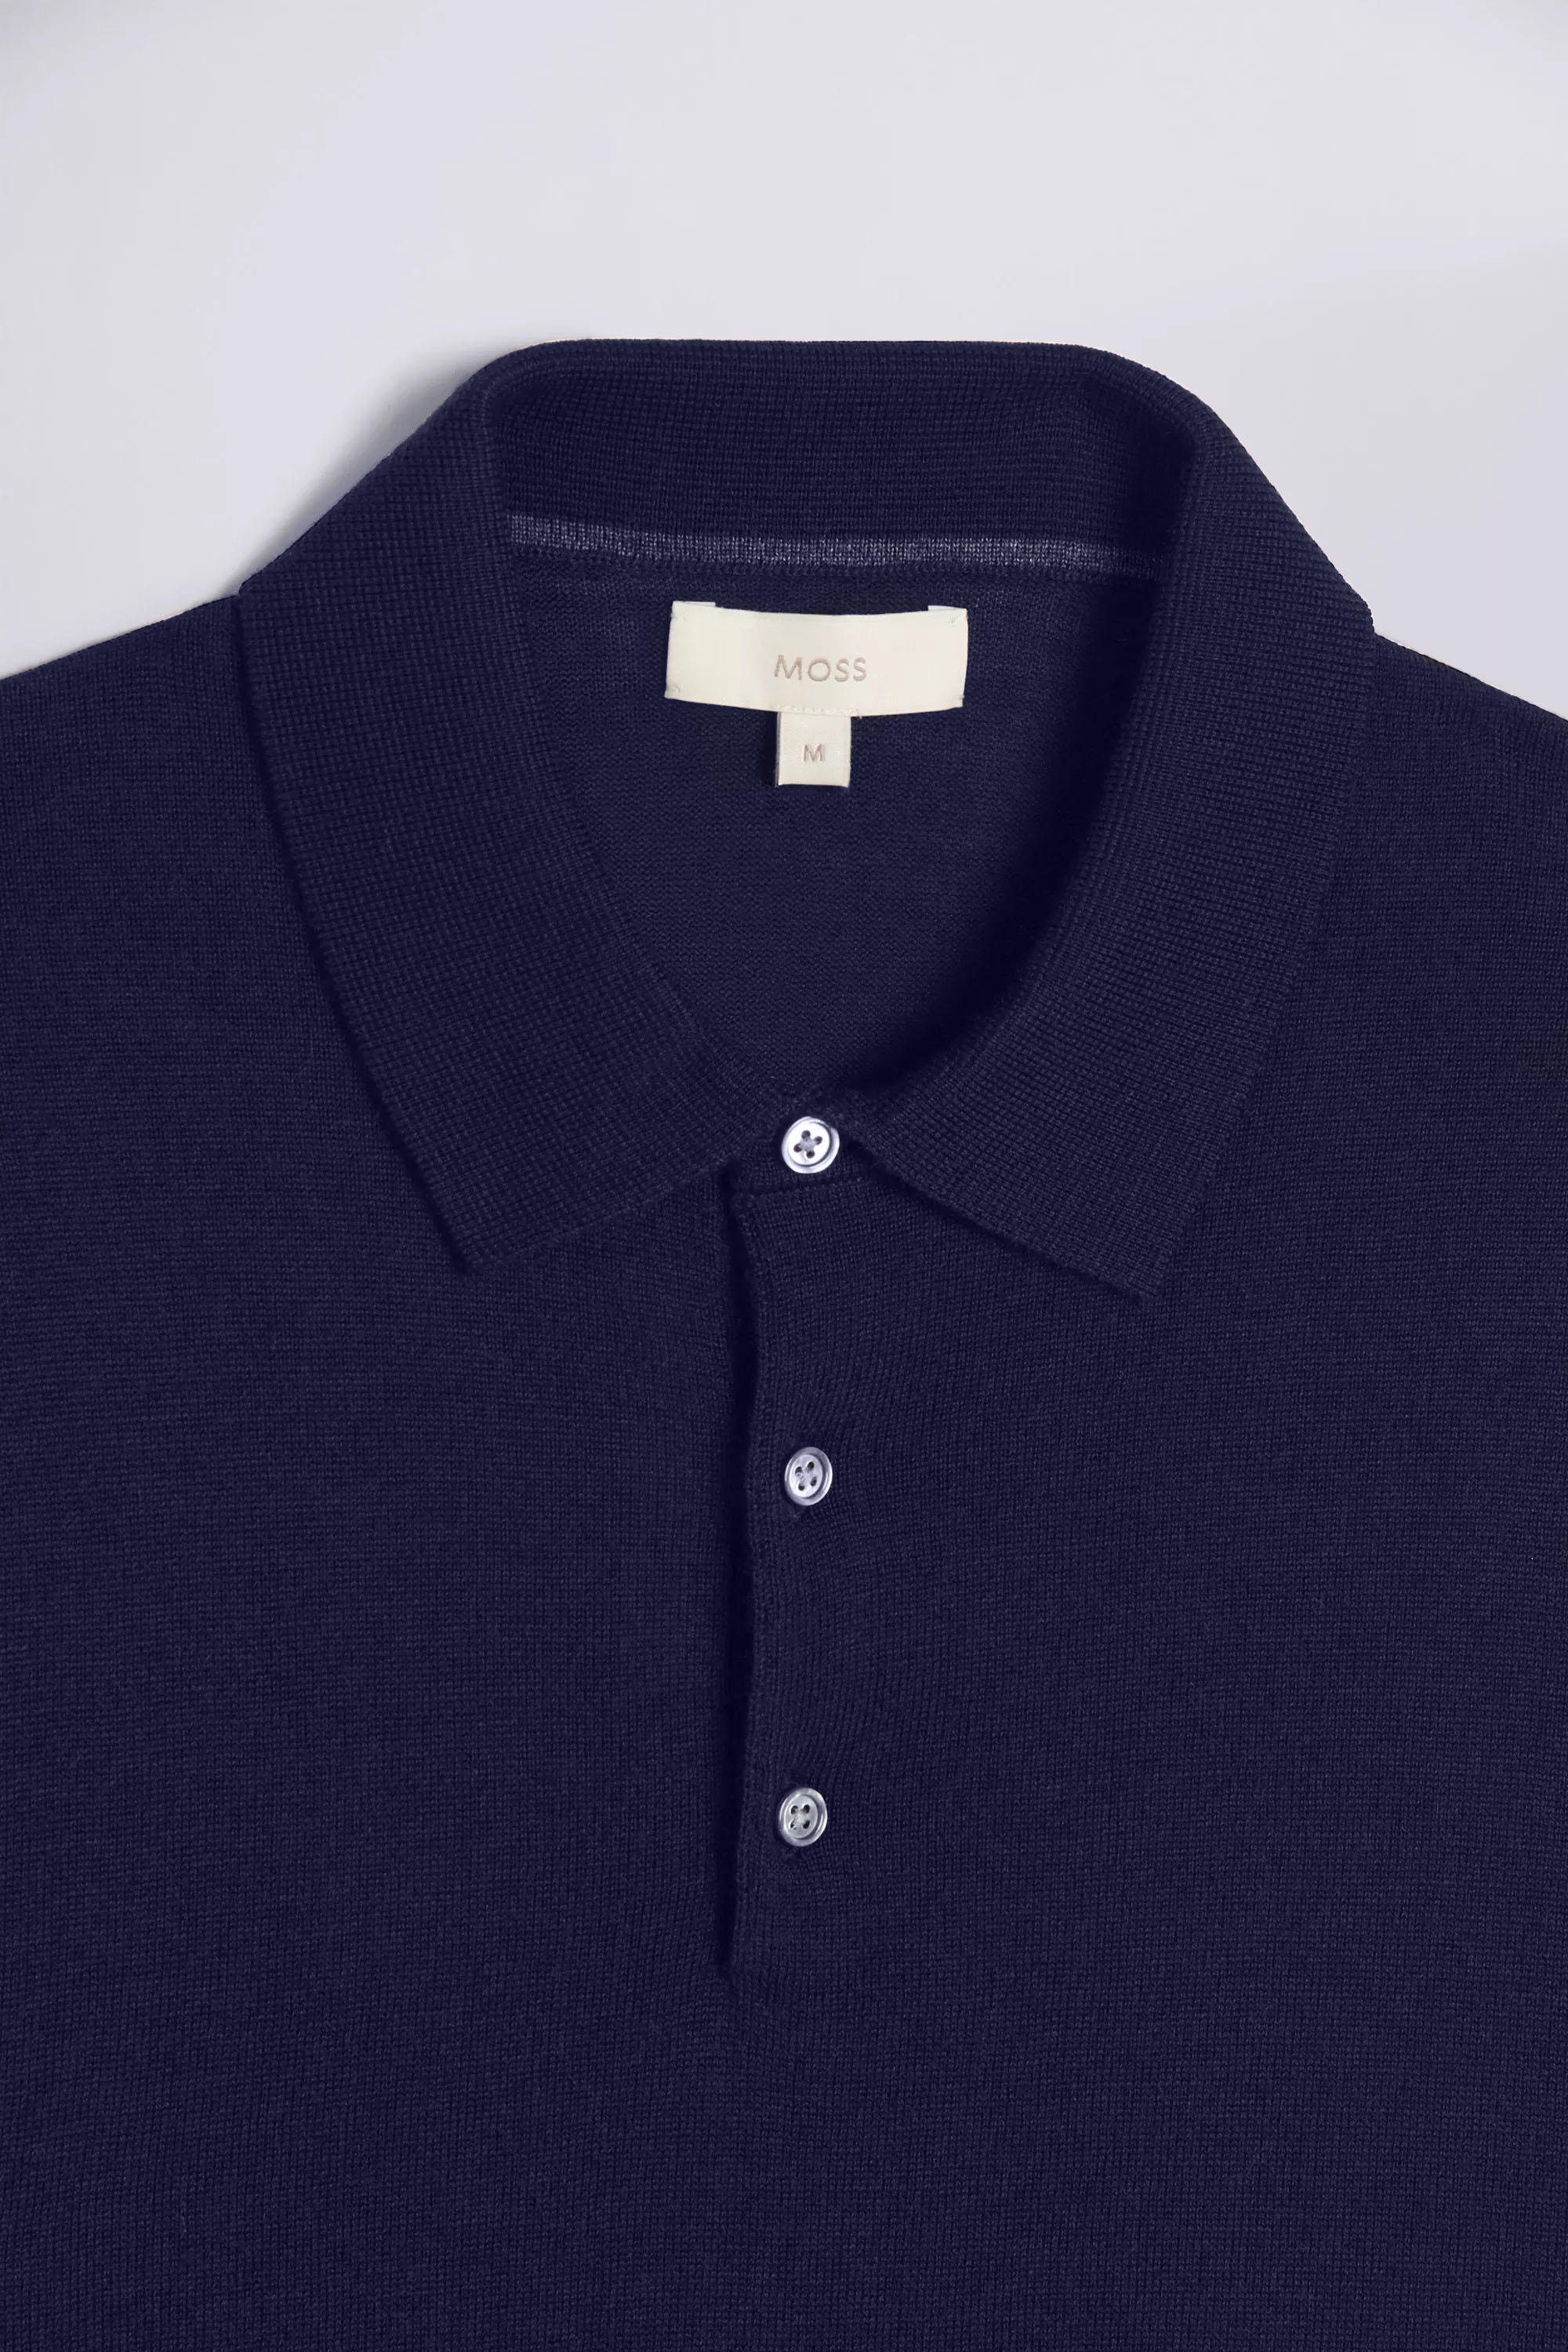 Navy Merino Polo Shirt | Buy Online at Moss